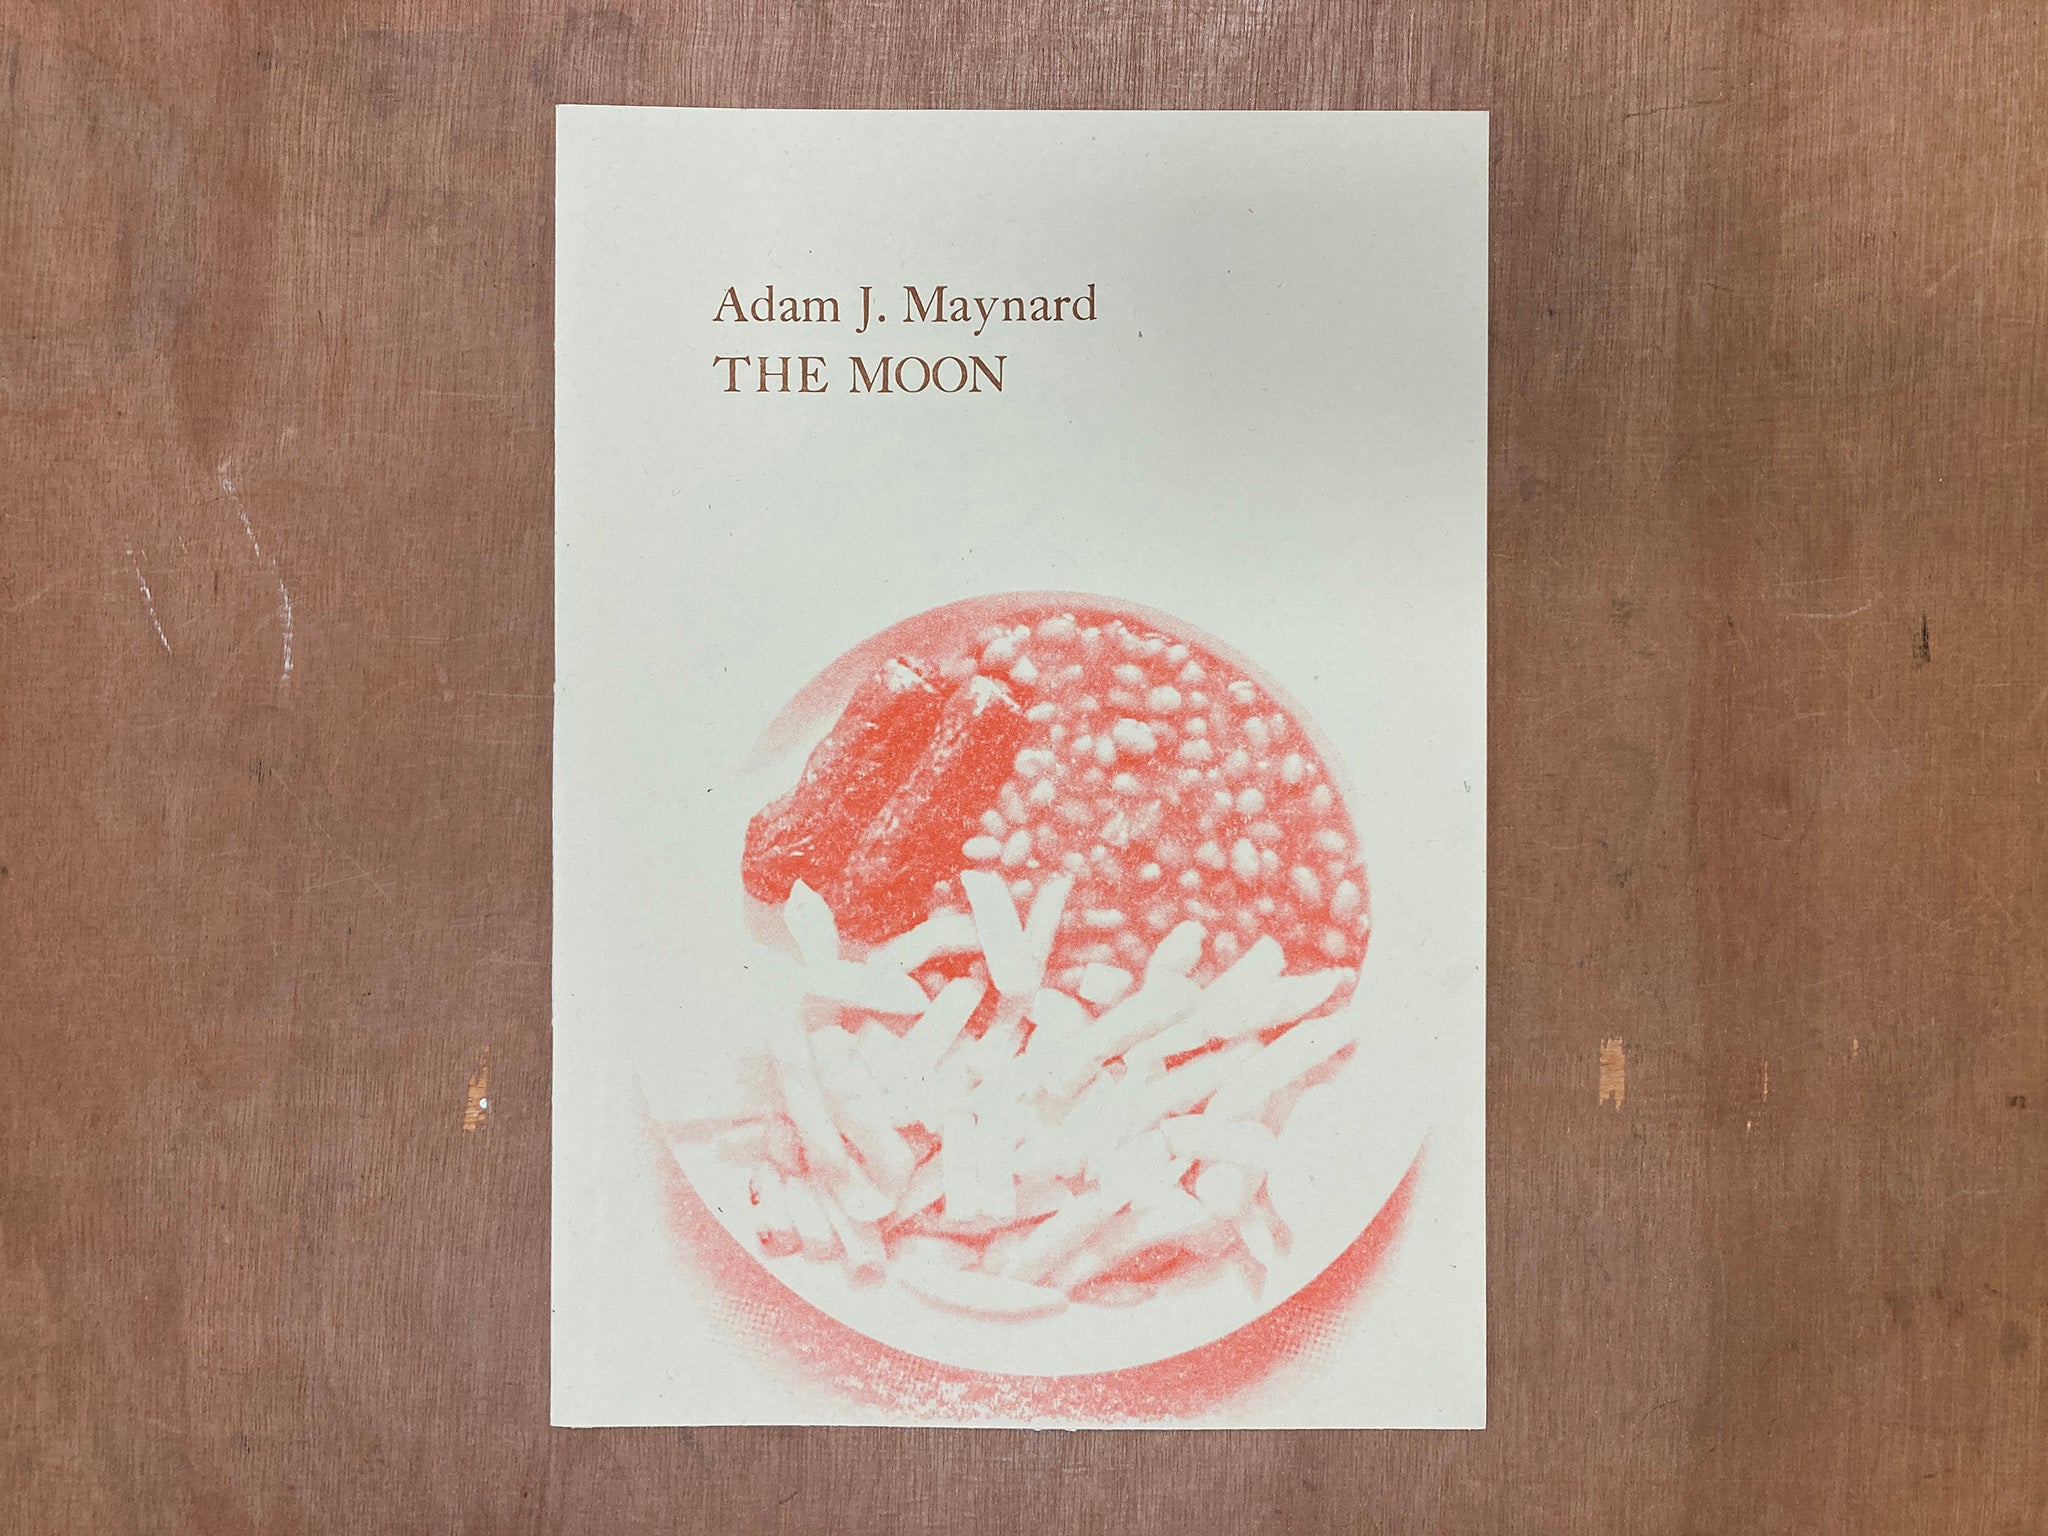 THE MOON by Adam J. Maynard